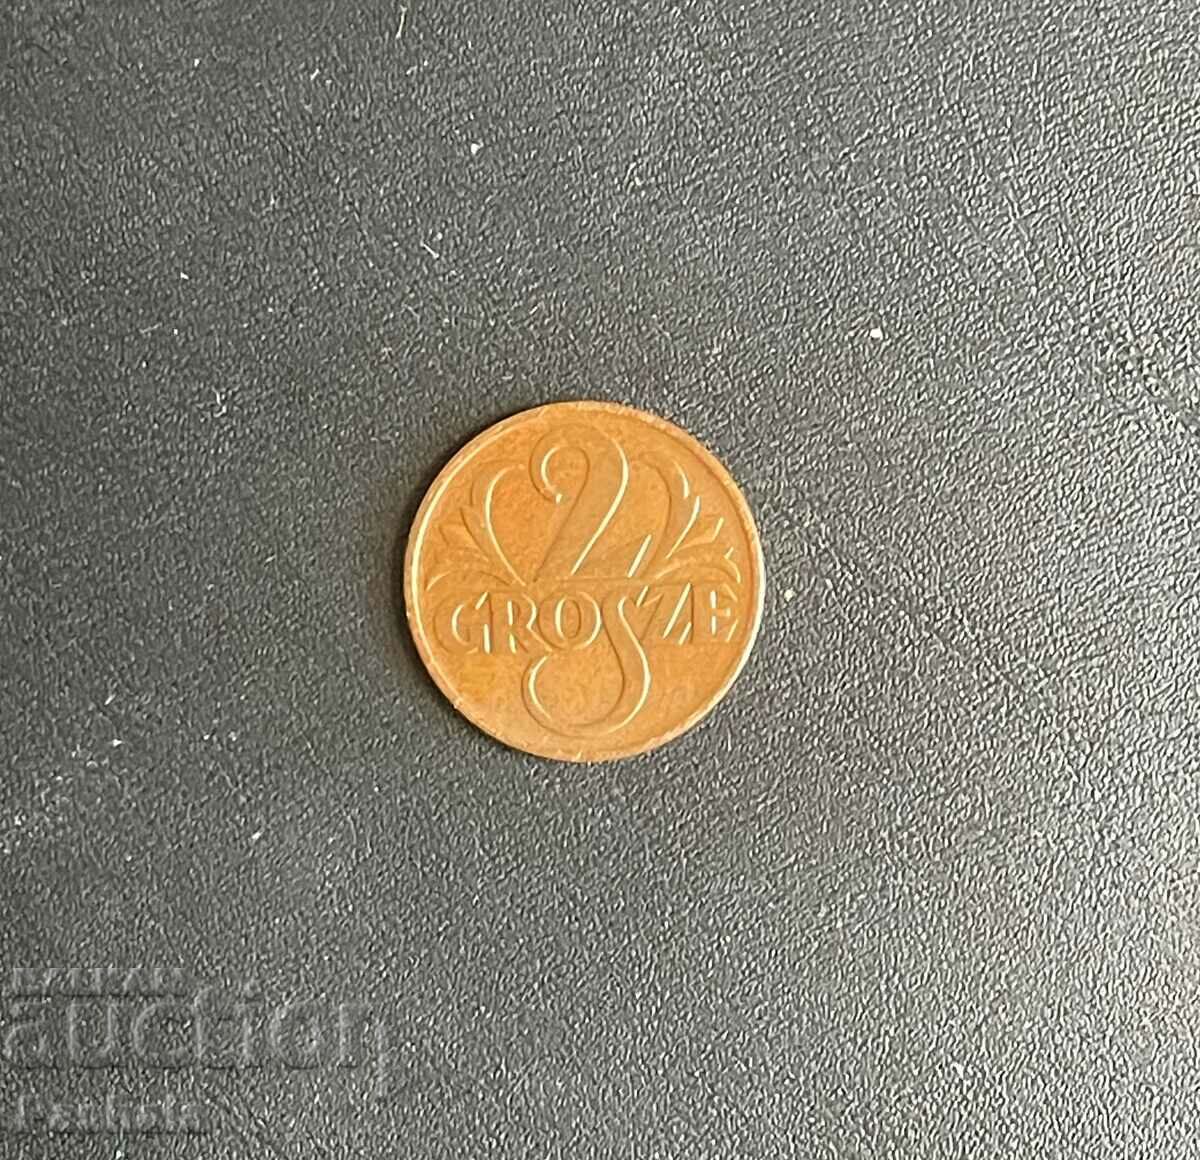 Полша 2 грош 1939 г.